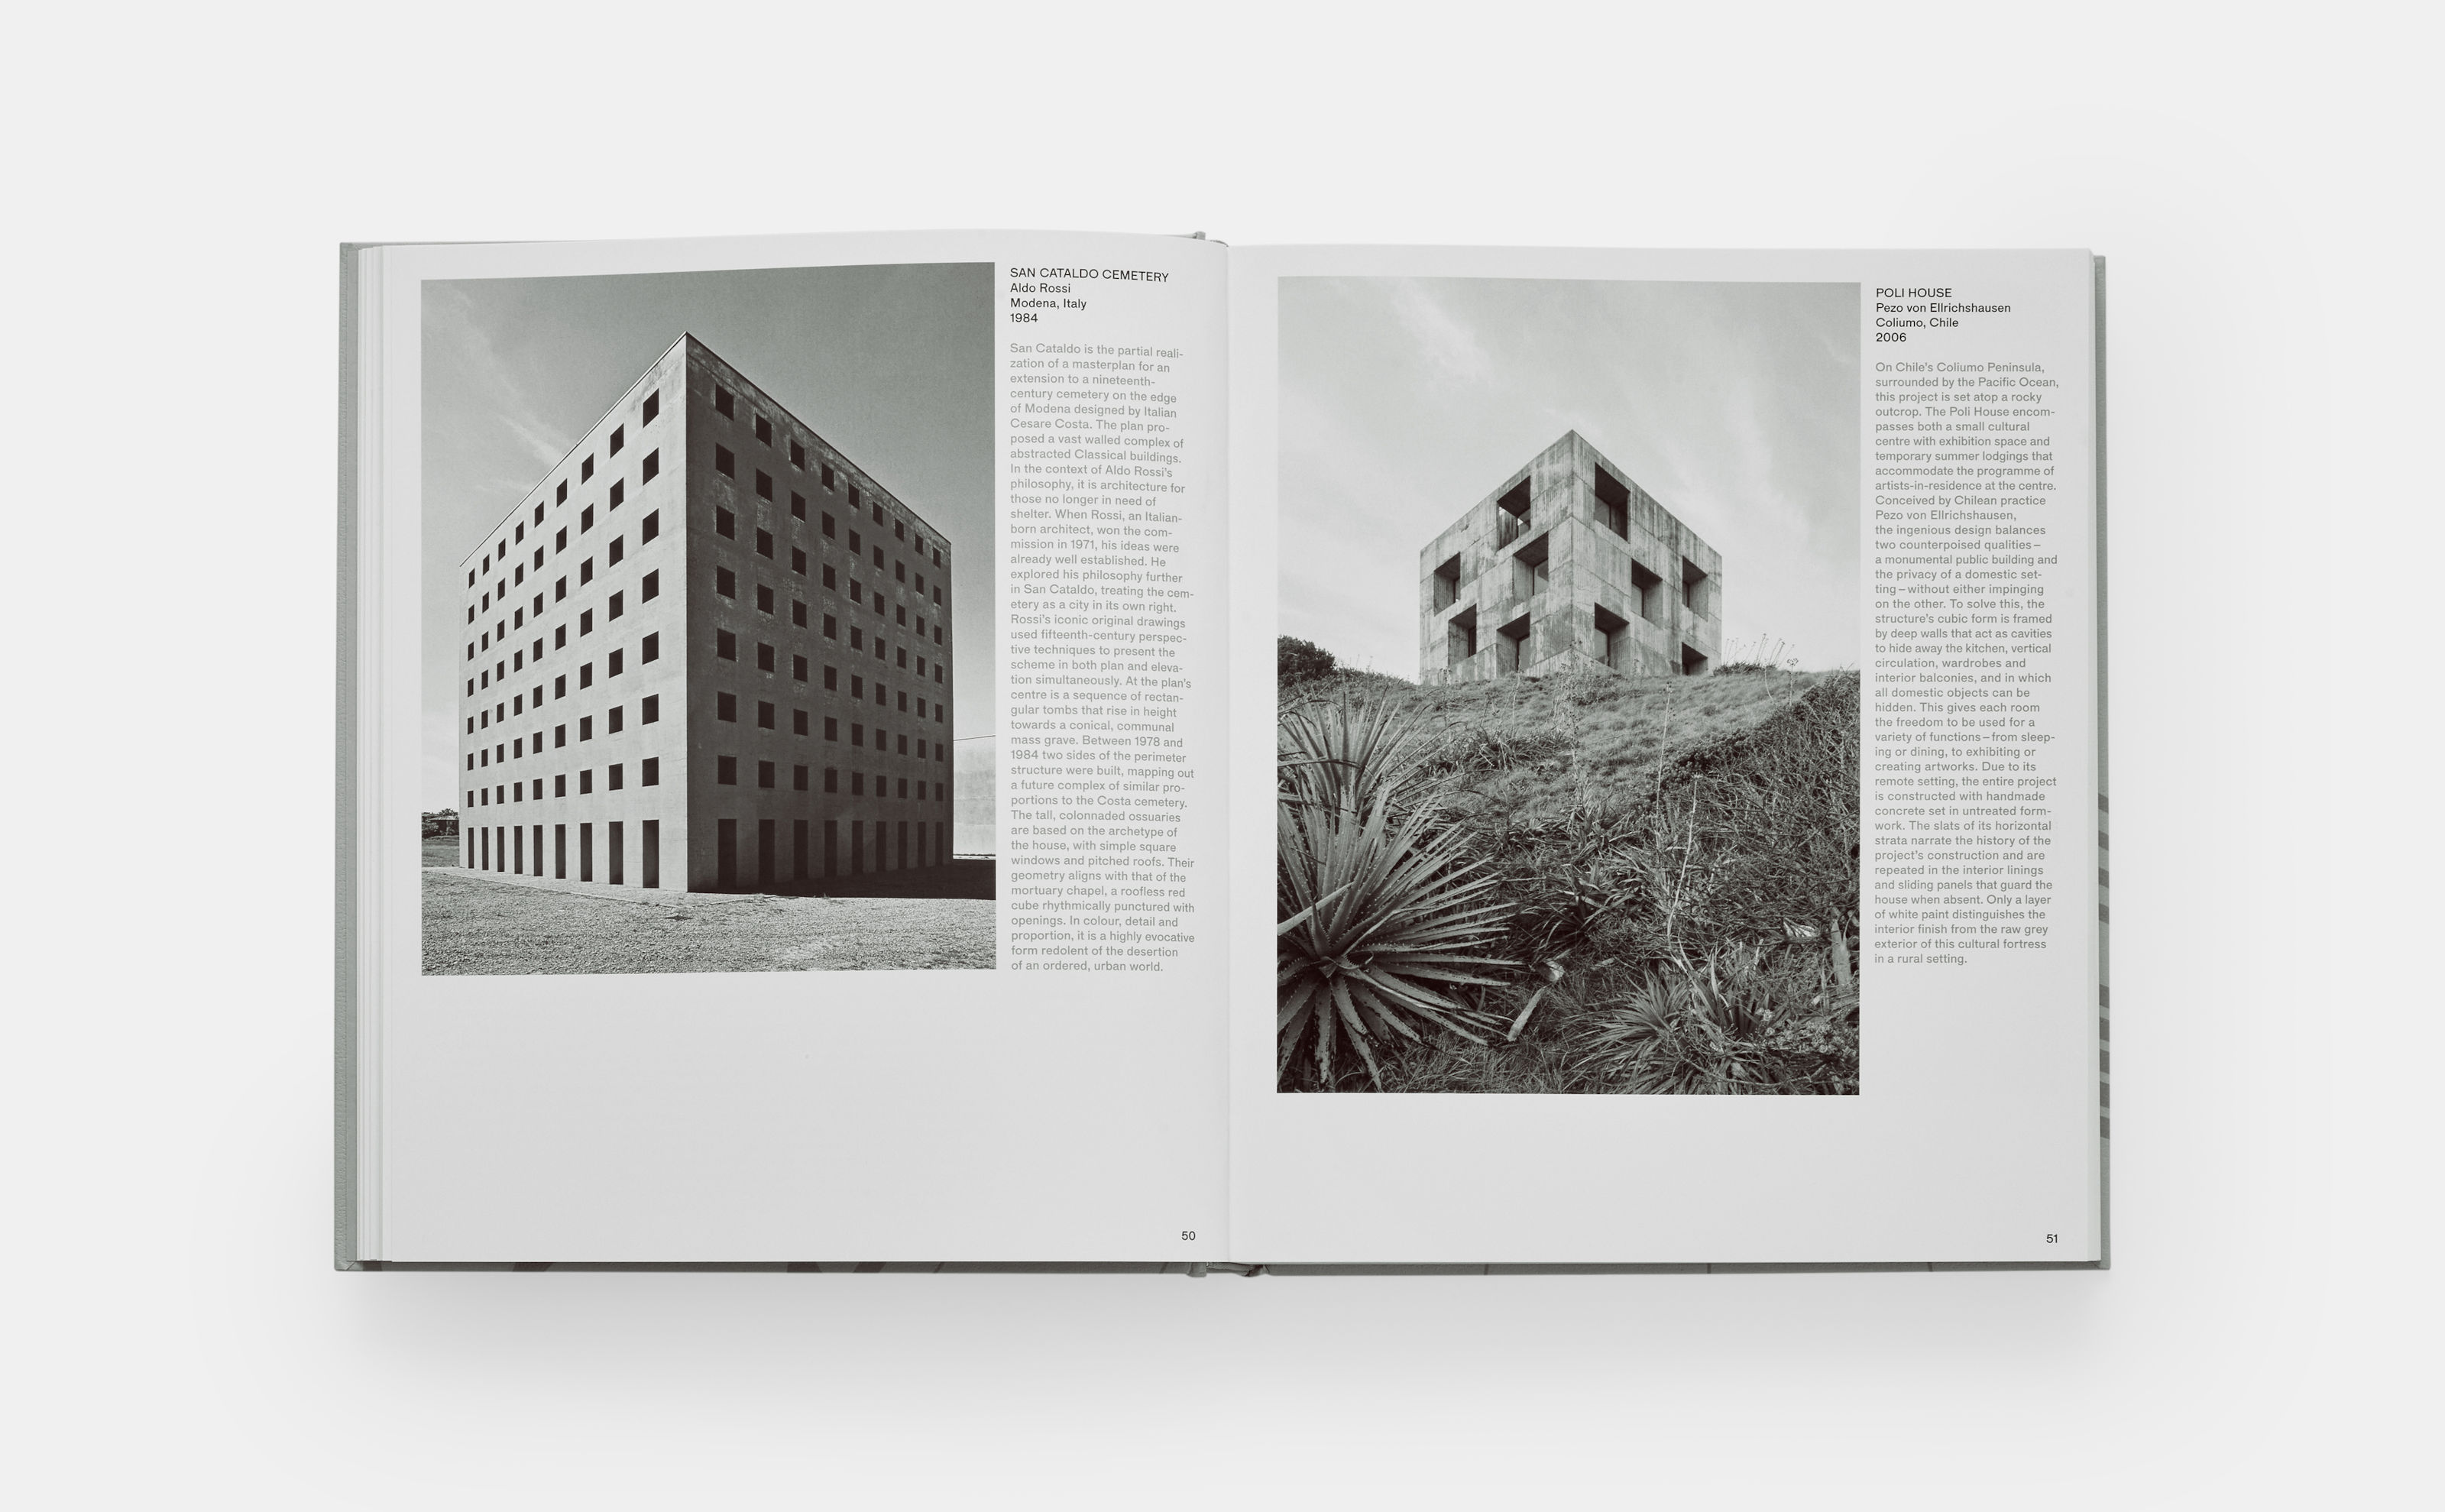 Concrete Architecture, published by Phaidon